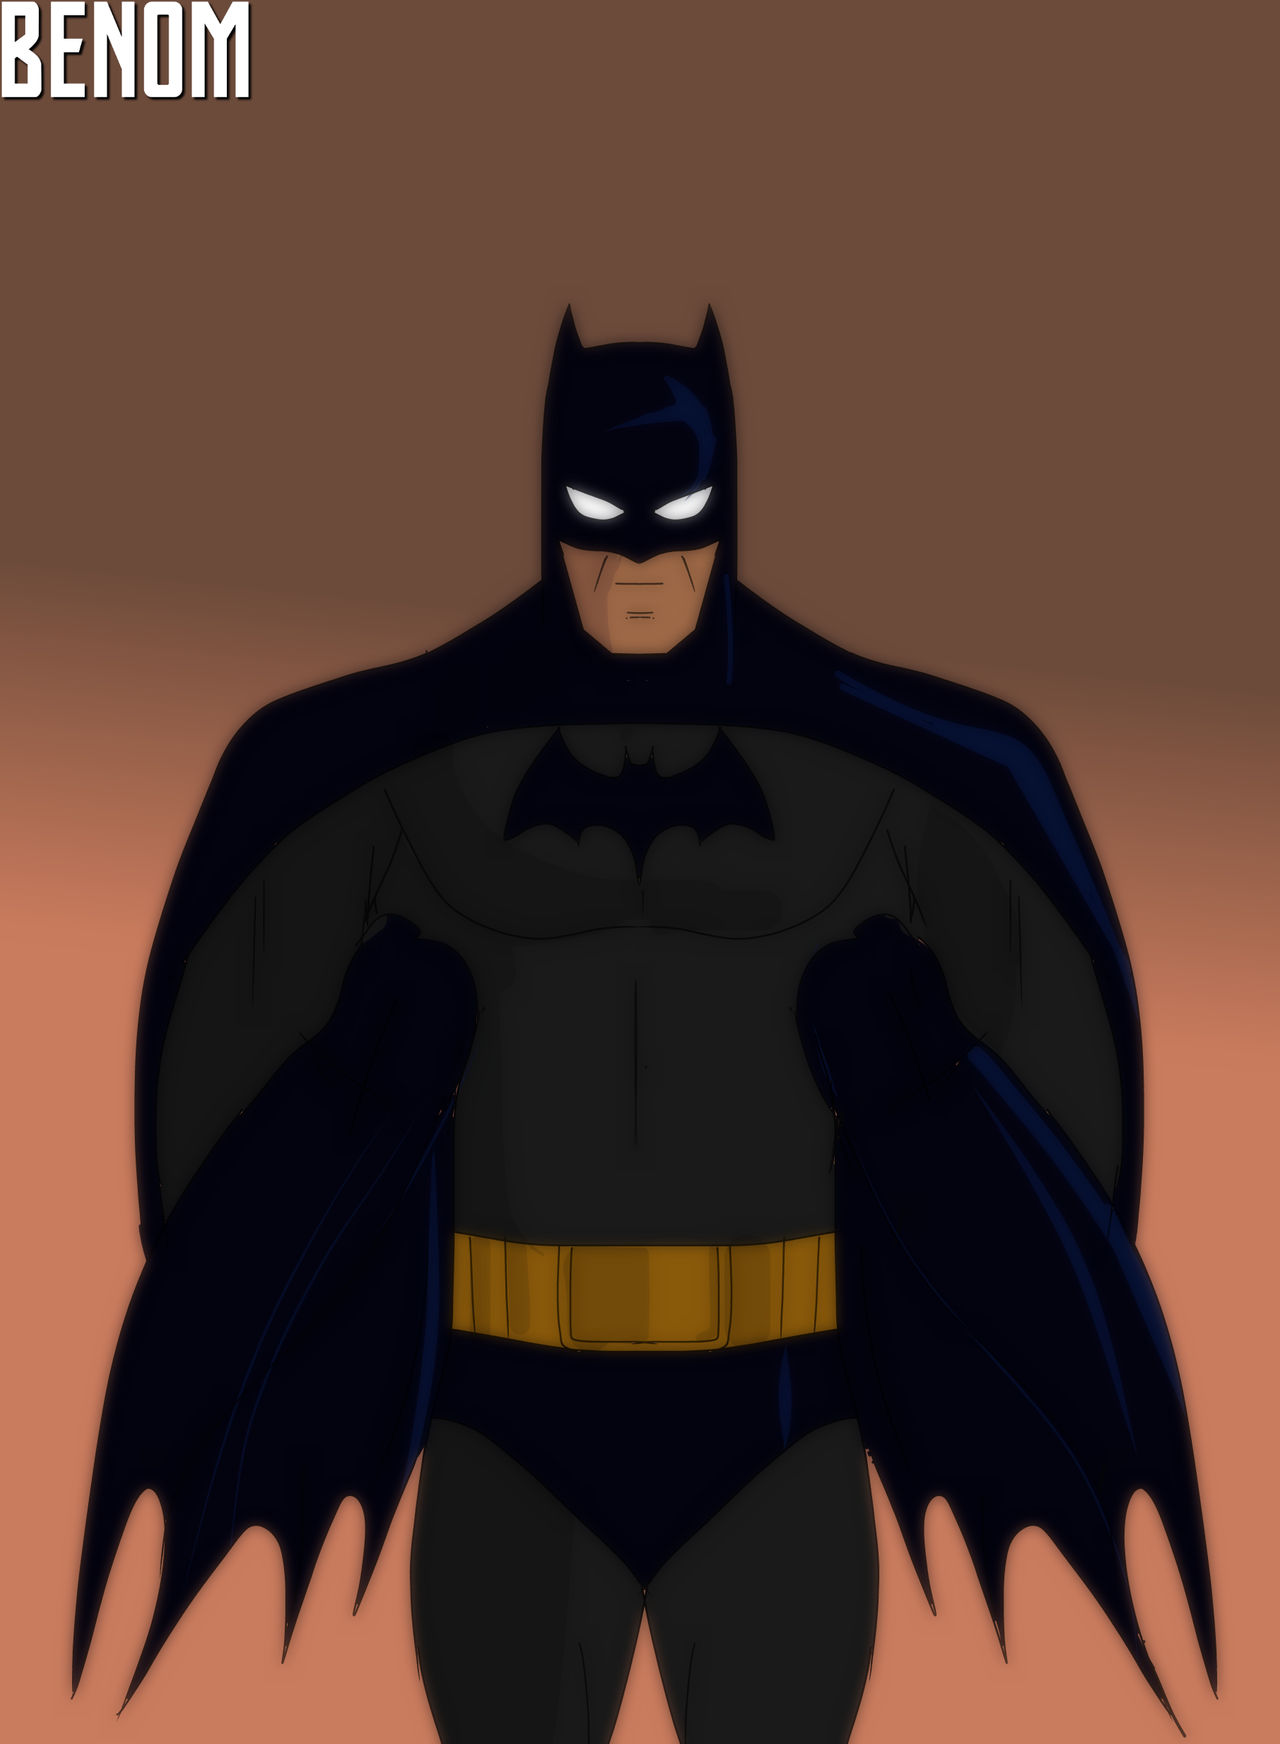 Batman (Crisis on two earths) by lethalBenom on DeviantArt